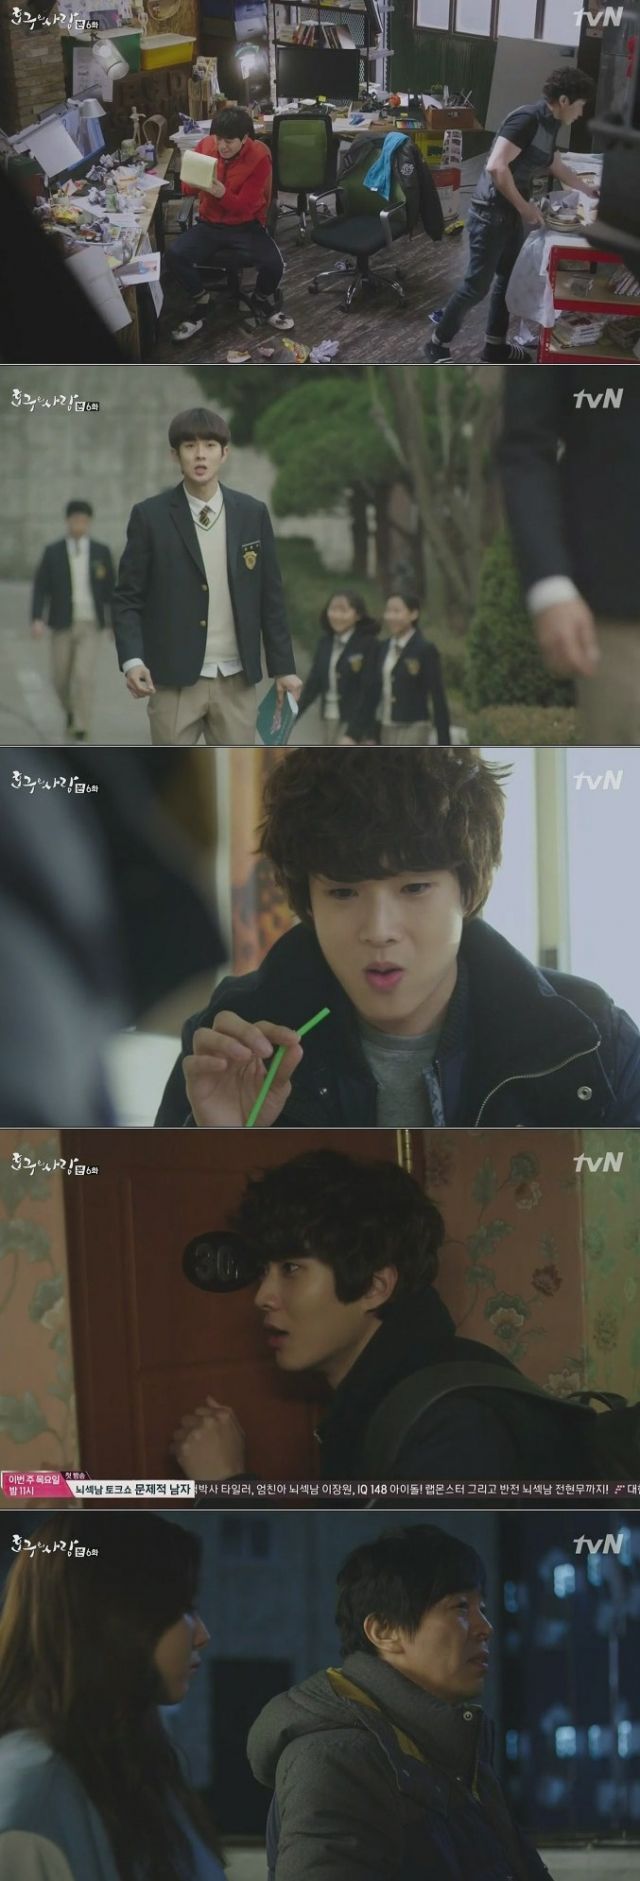 episode 6 captures for the Korean drama 'Hogu's Love'